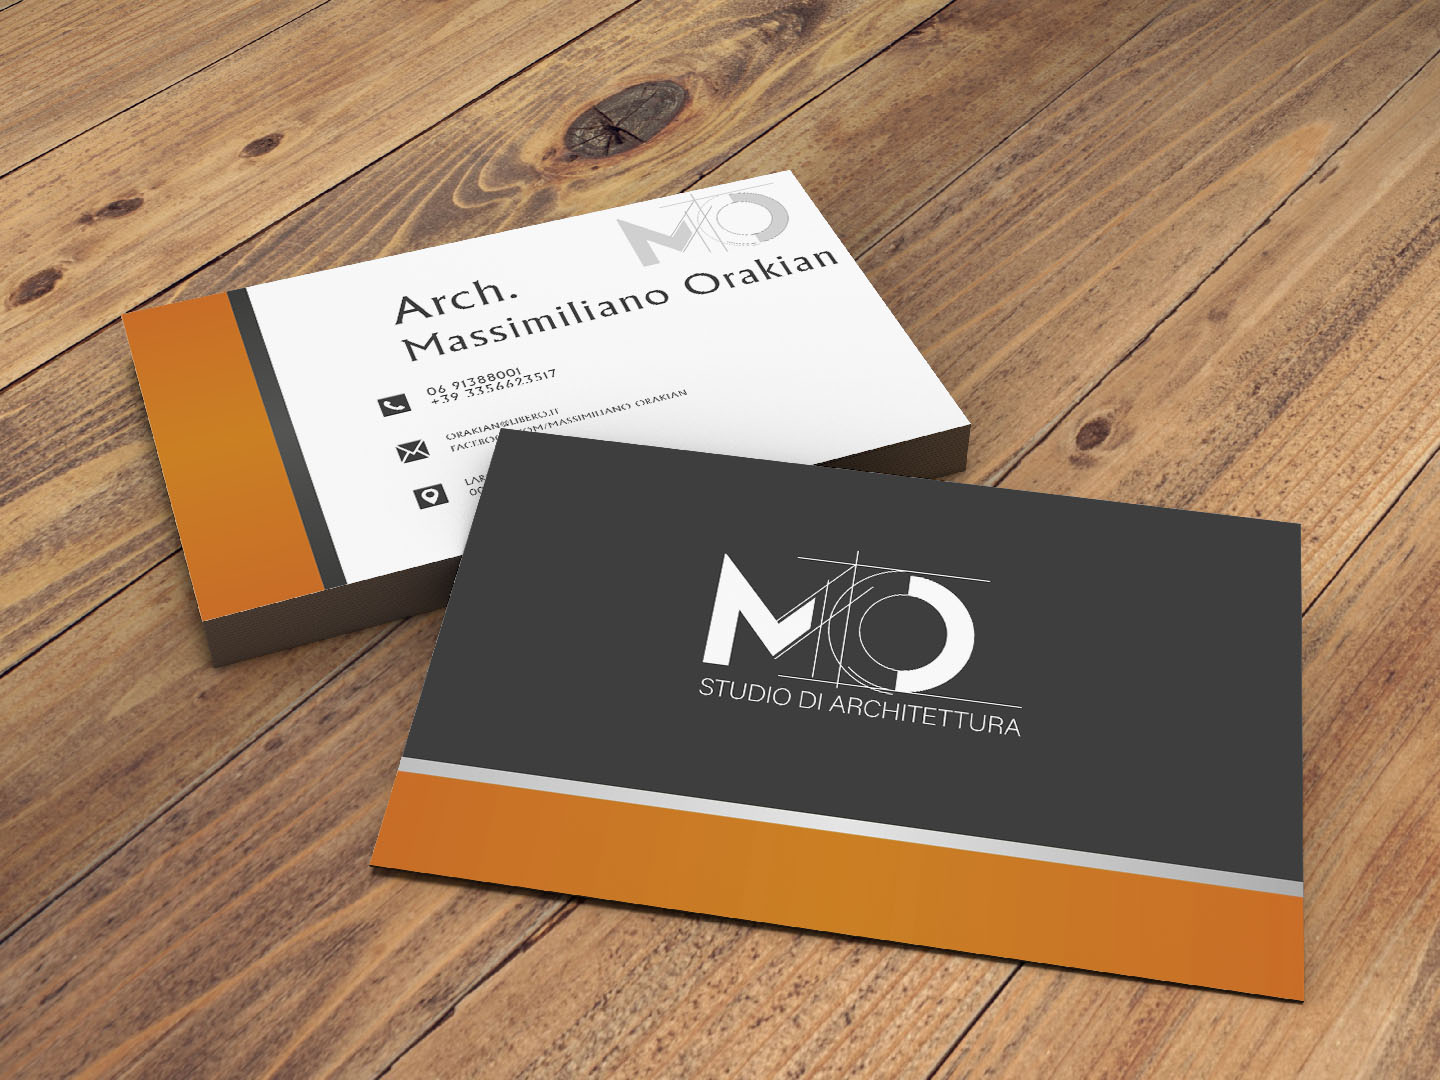 Arch. Massimiliano Orakian - Business Card